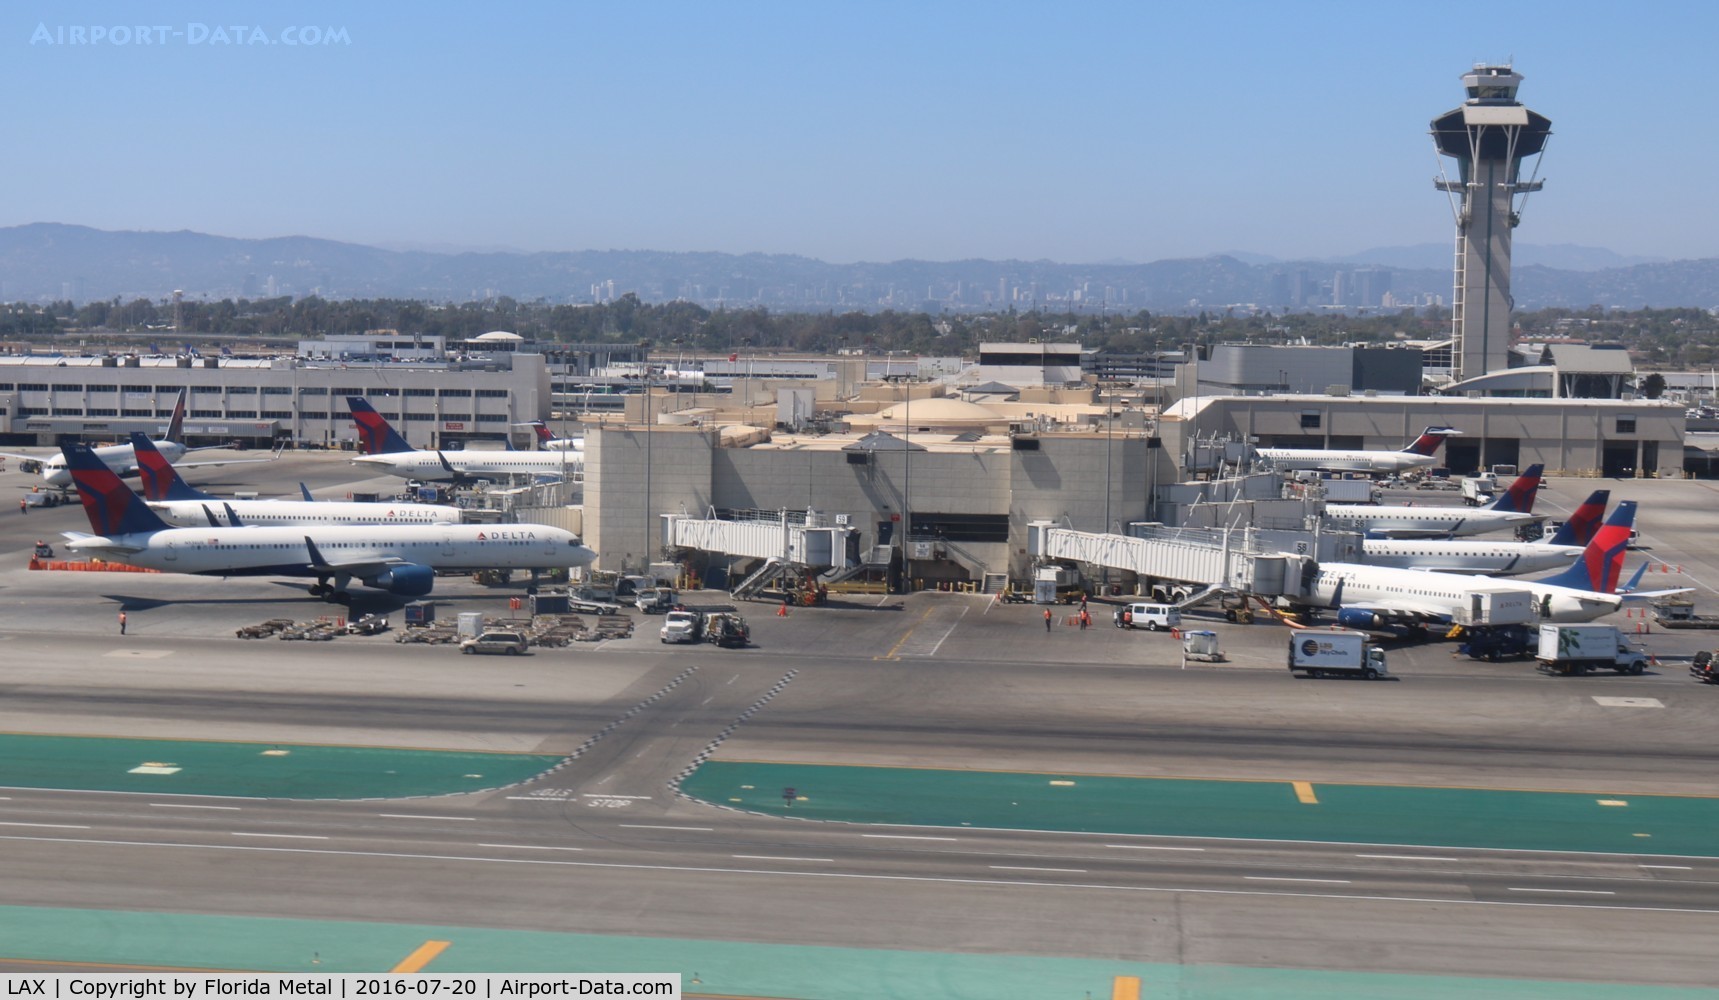 Los Angeles International Airport (LAX) - Delta terminal